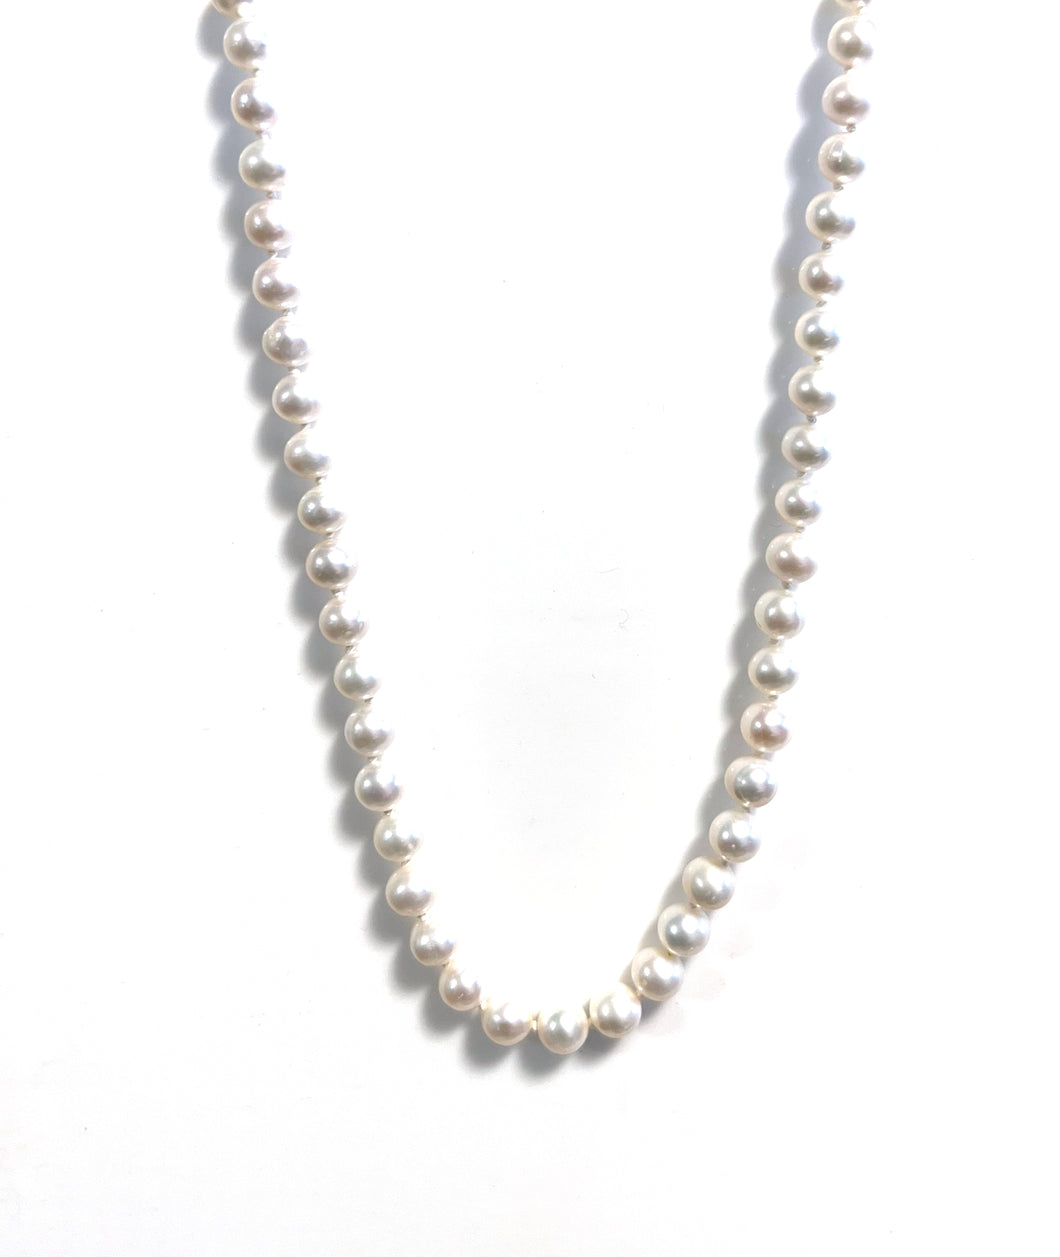 Australian Handmade White Pearl Necklace